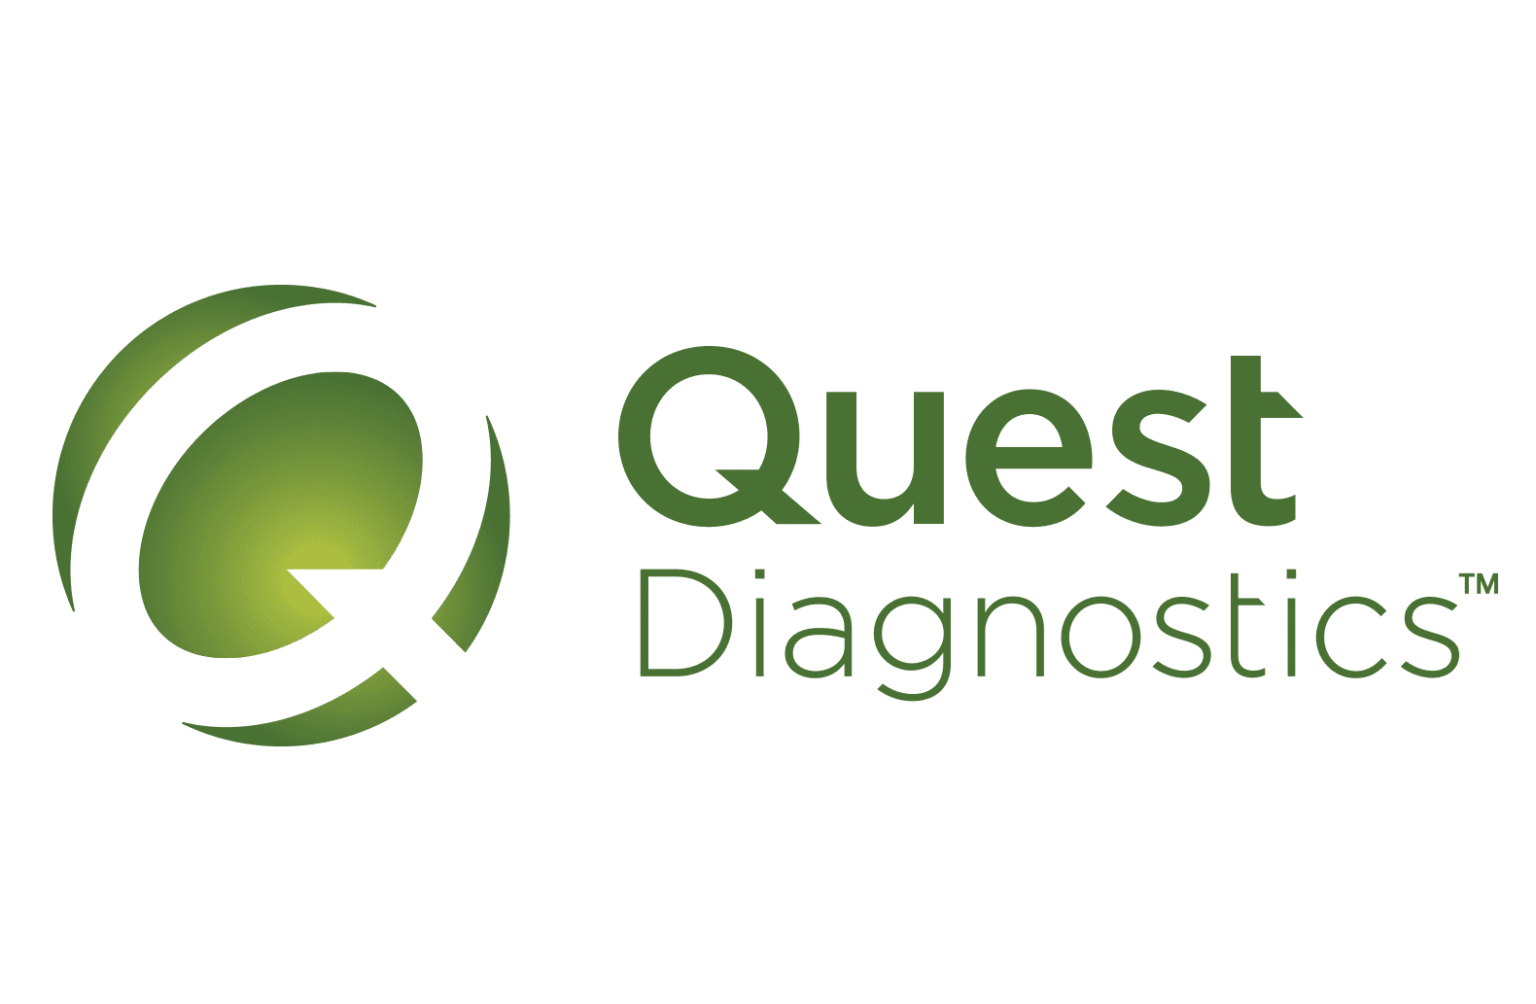 quest diagnostics appointment scheduling